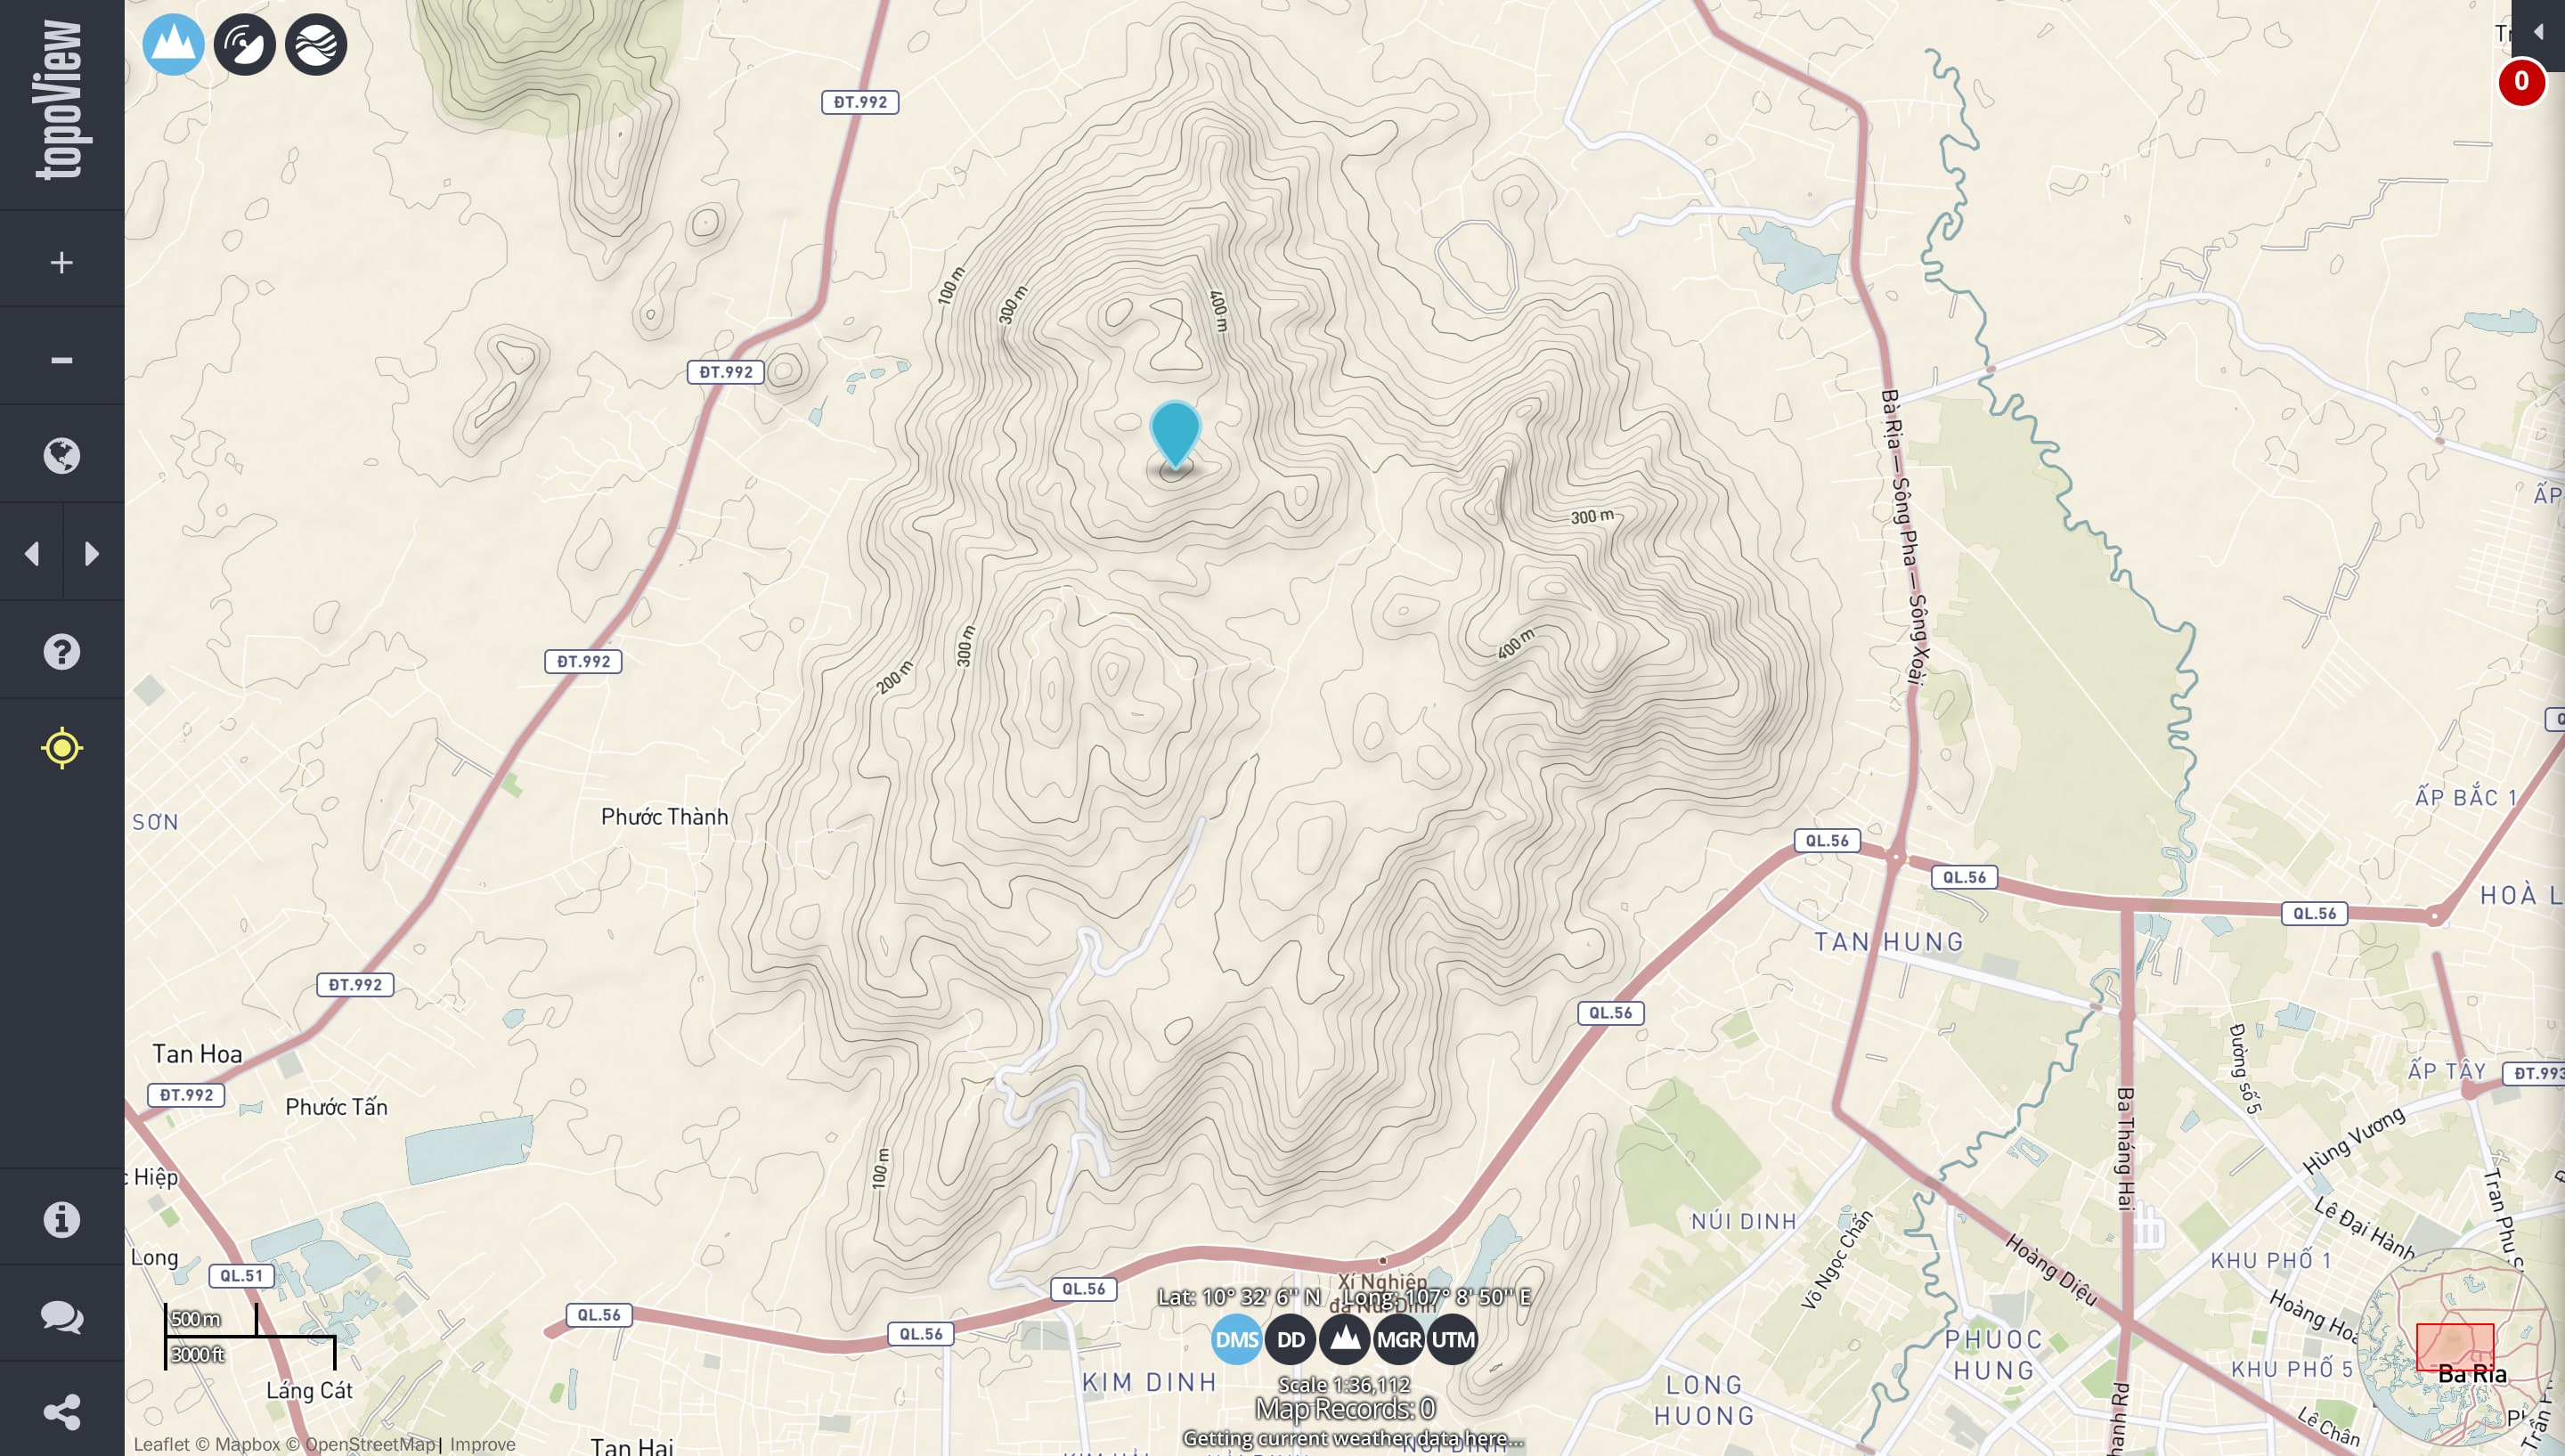 tinhte_topographic_map_ban_do_dia_hinh_6.jpg